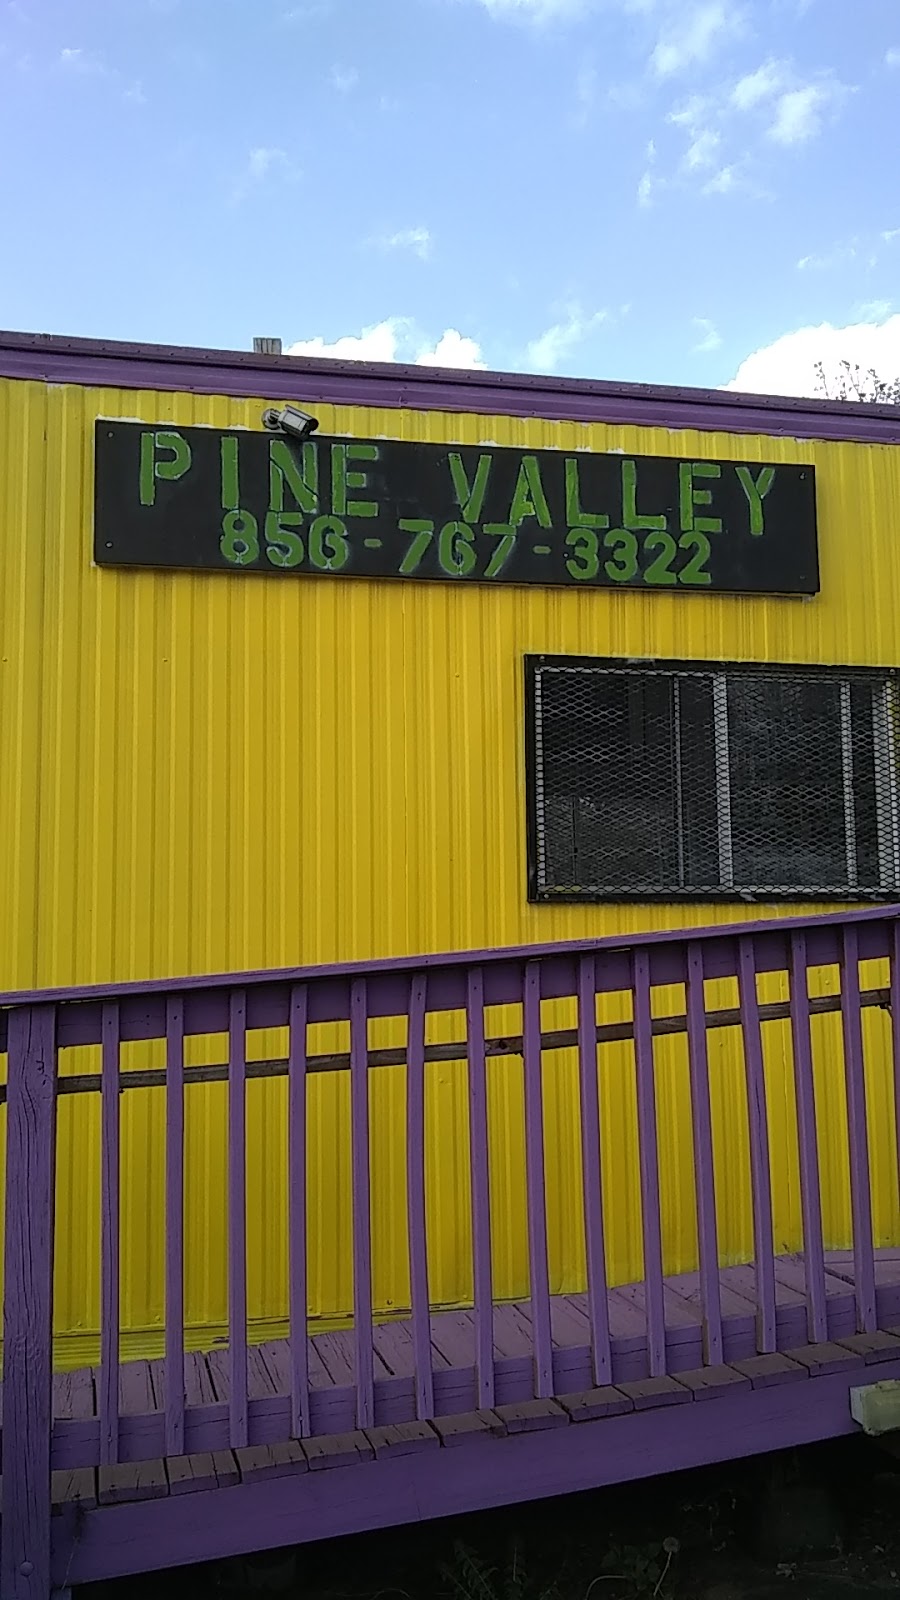 Pine Valley Motors | 244 W White Horse Pike, Berlin, NJ 08009 | Phone: (856) 767-3322